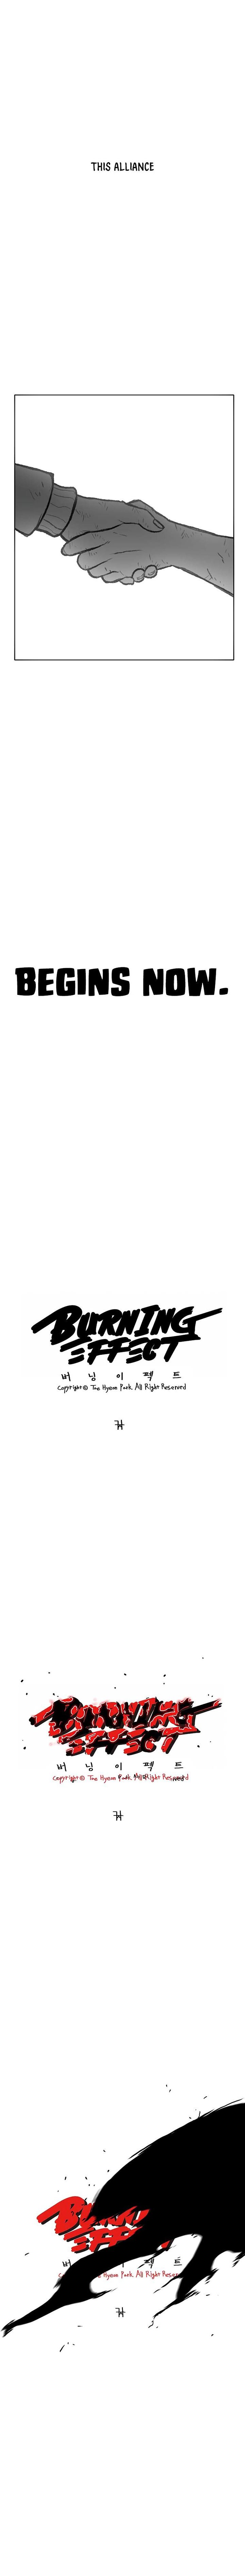 burning_effect_138_24